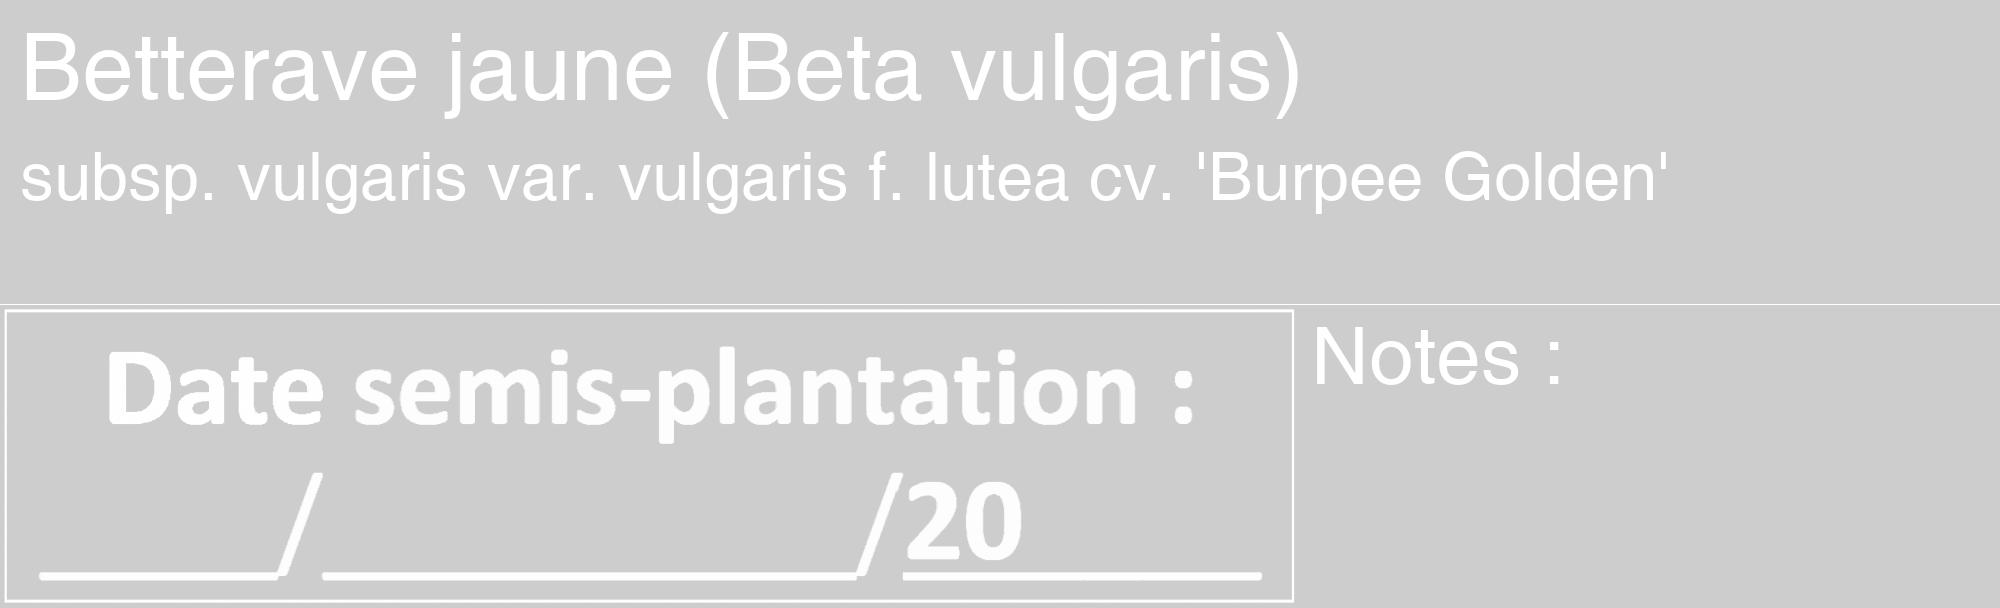 Étiquette de : Beta vulgaris subsp. vulgaris var. vulgaris f. lutea cv. 'Burpee Golden' - format c - style blanche41_basique_basiquehel avec comestibilité